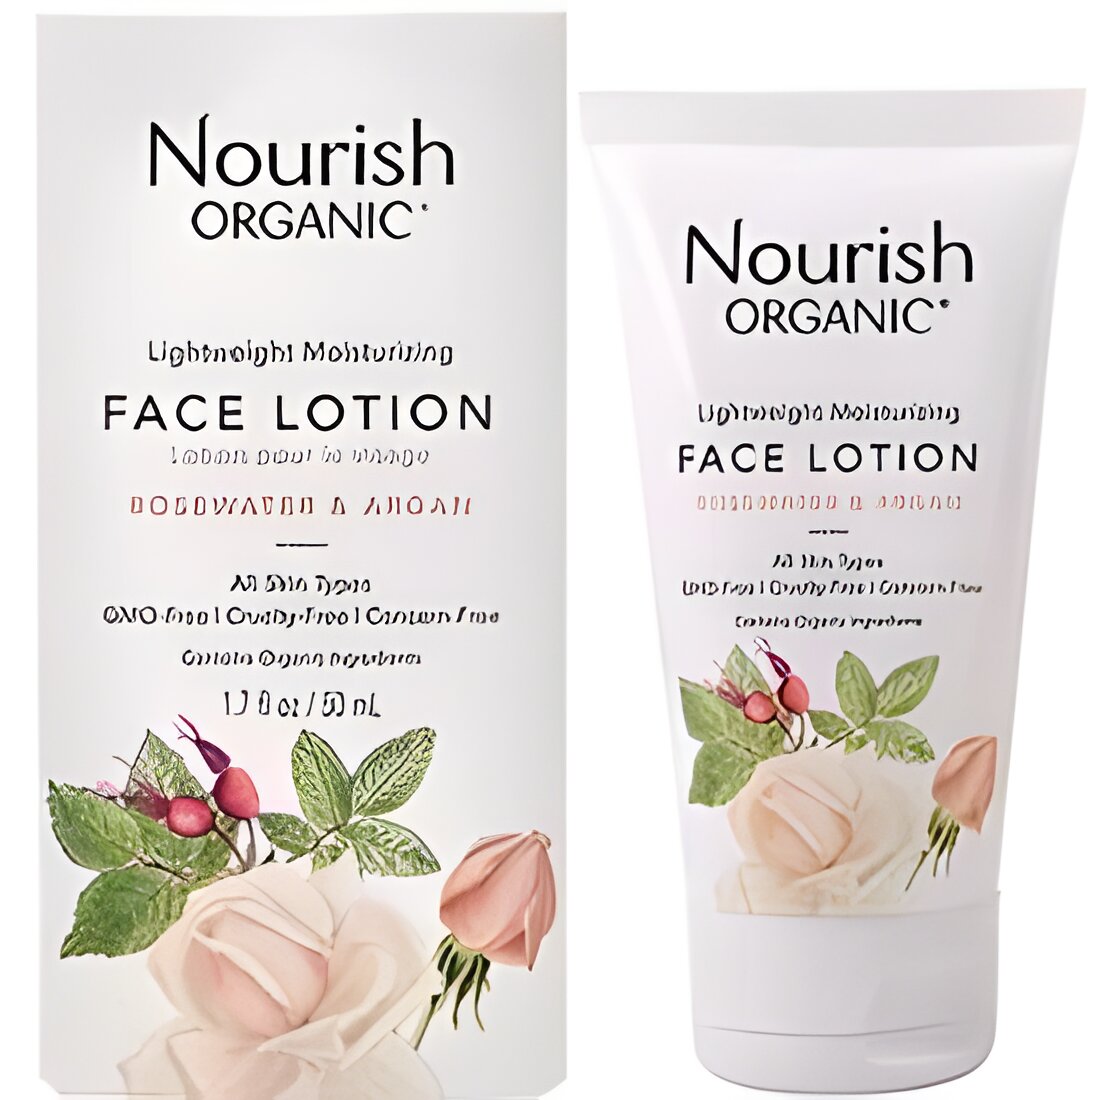 Free Nourish Organic Face Lotion